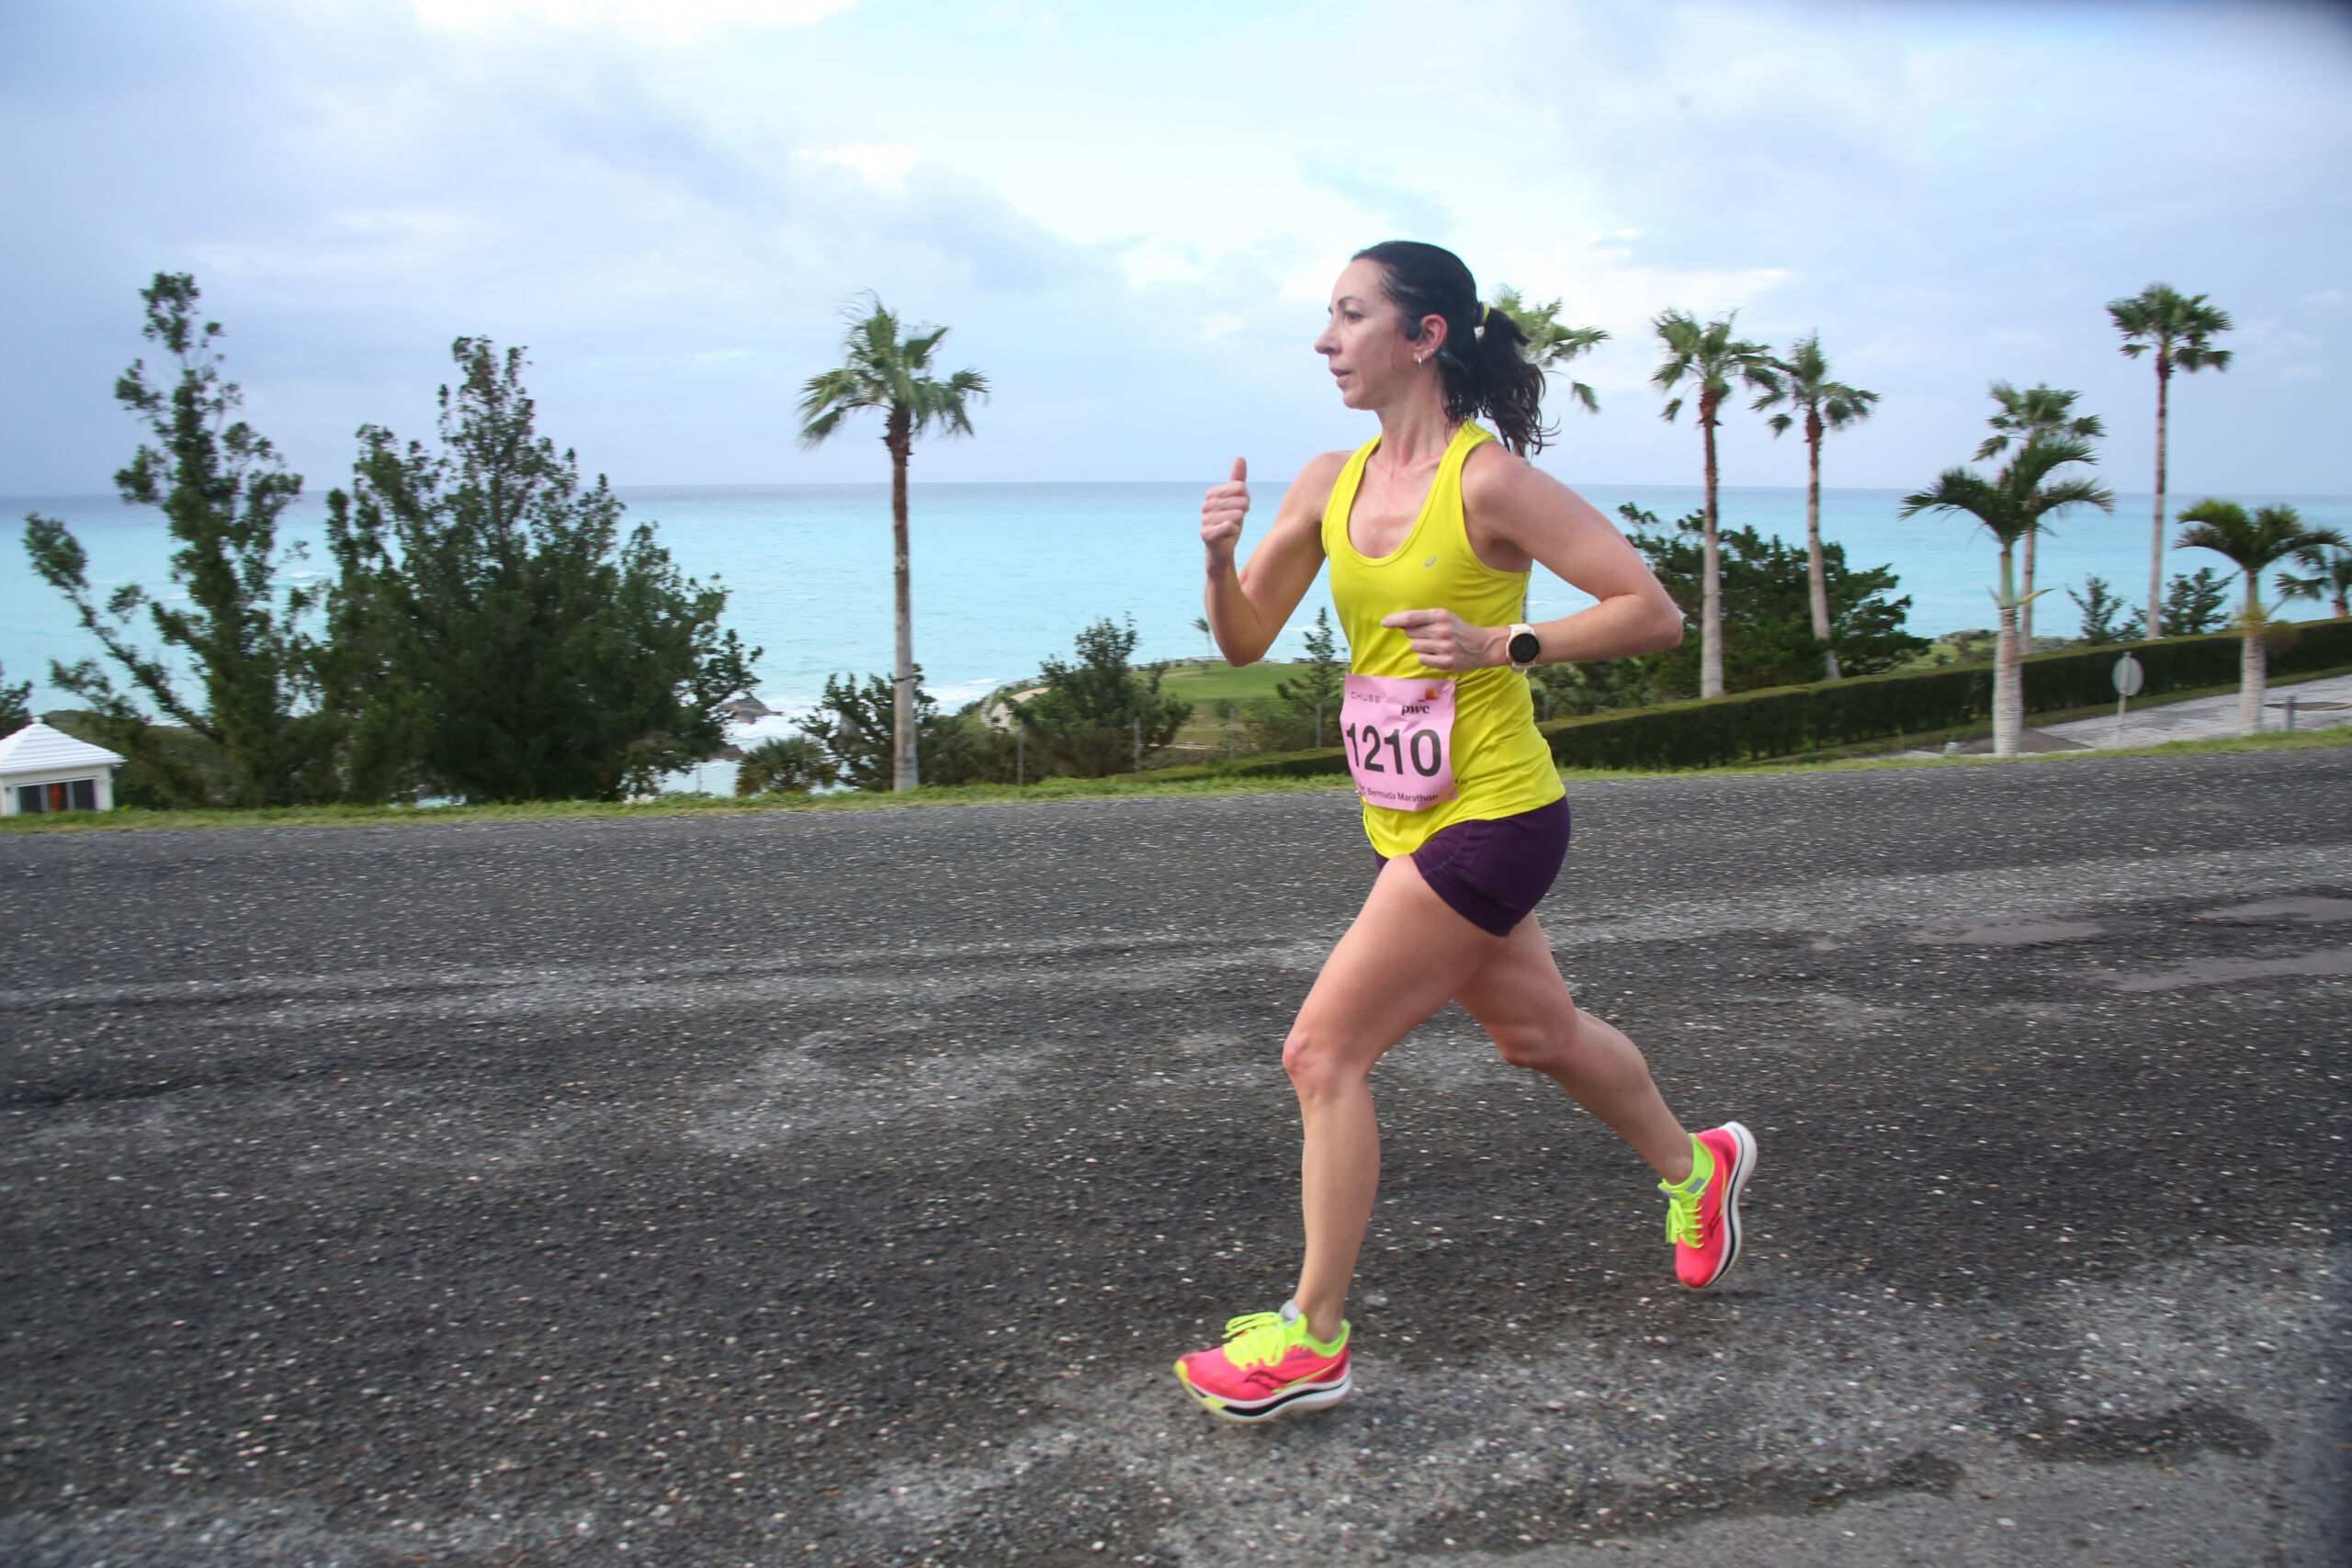 Register now for the PwC Bermuda Marathon